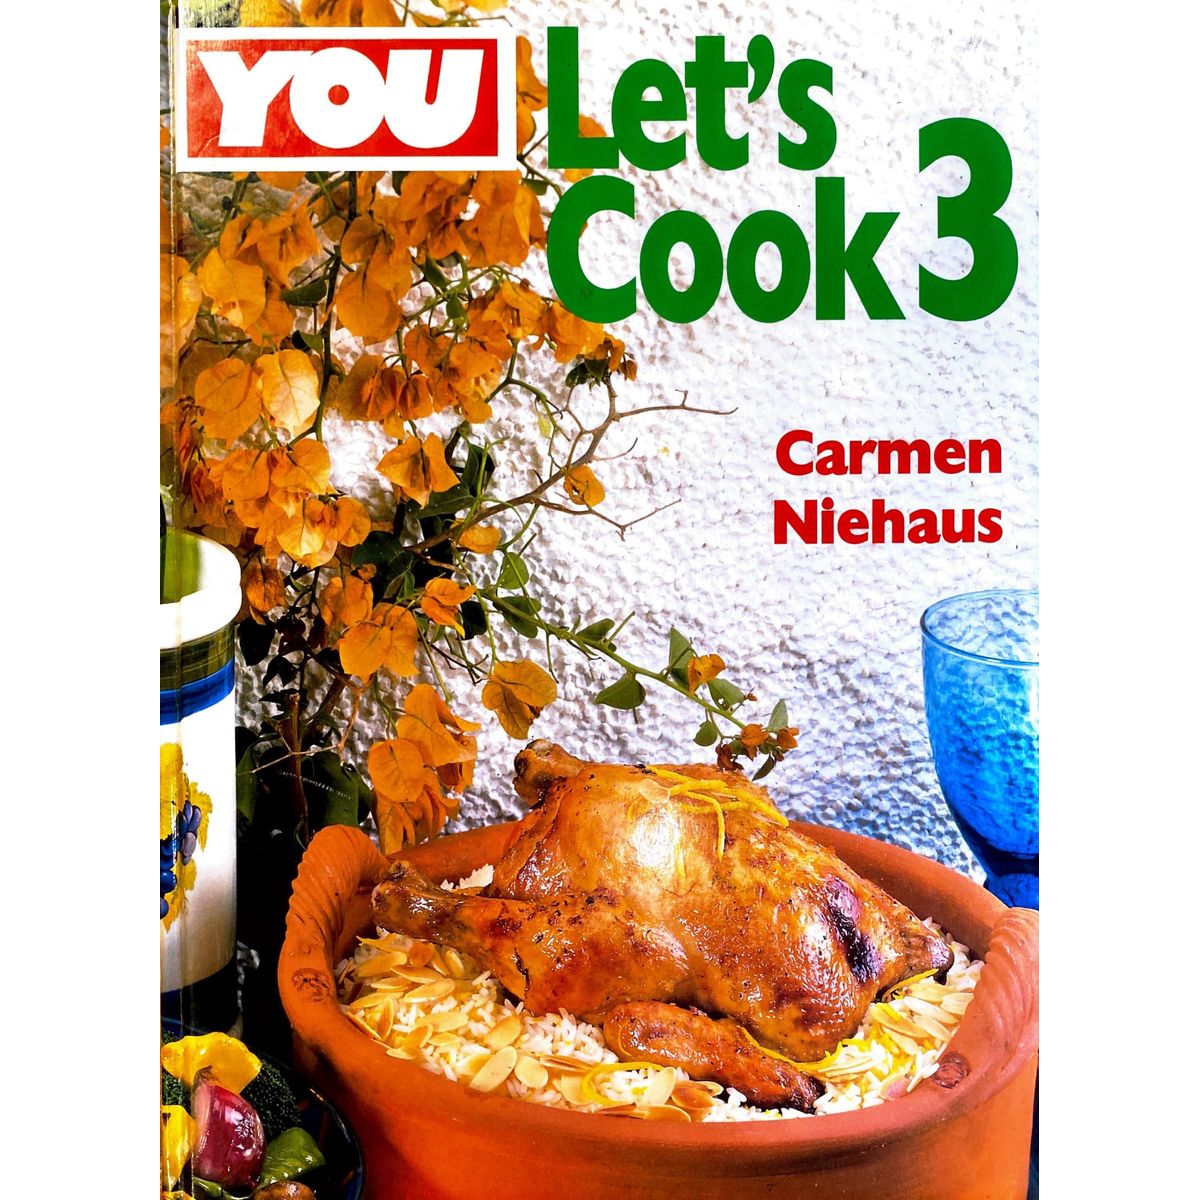 ISBN: 9780798135788 / 0798135786 - Let's Cook 3 by Carmen Niehaus [1996]